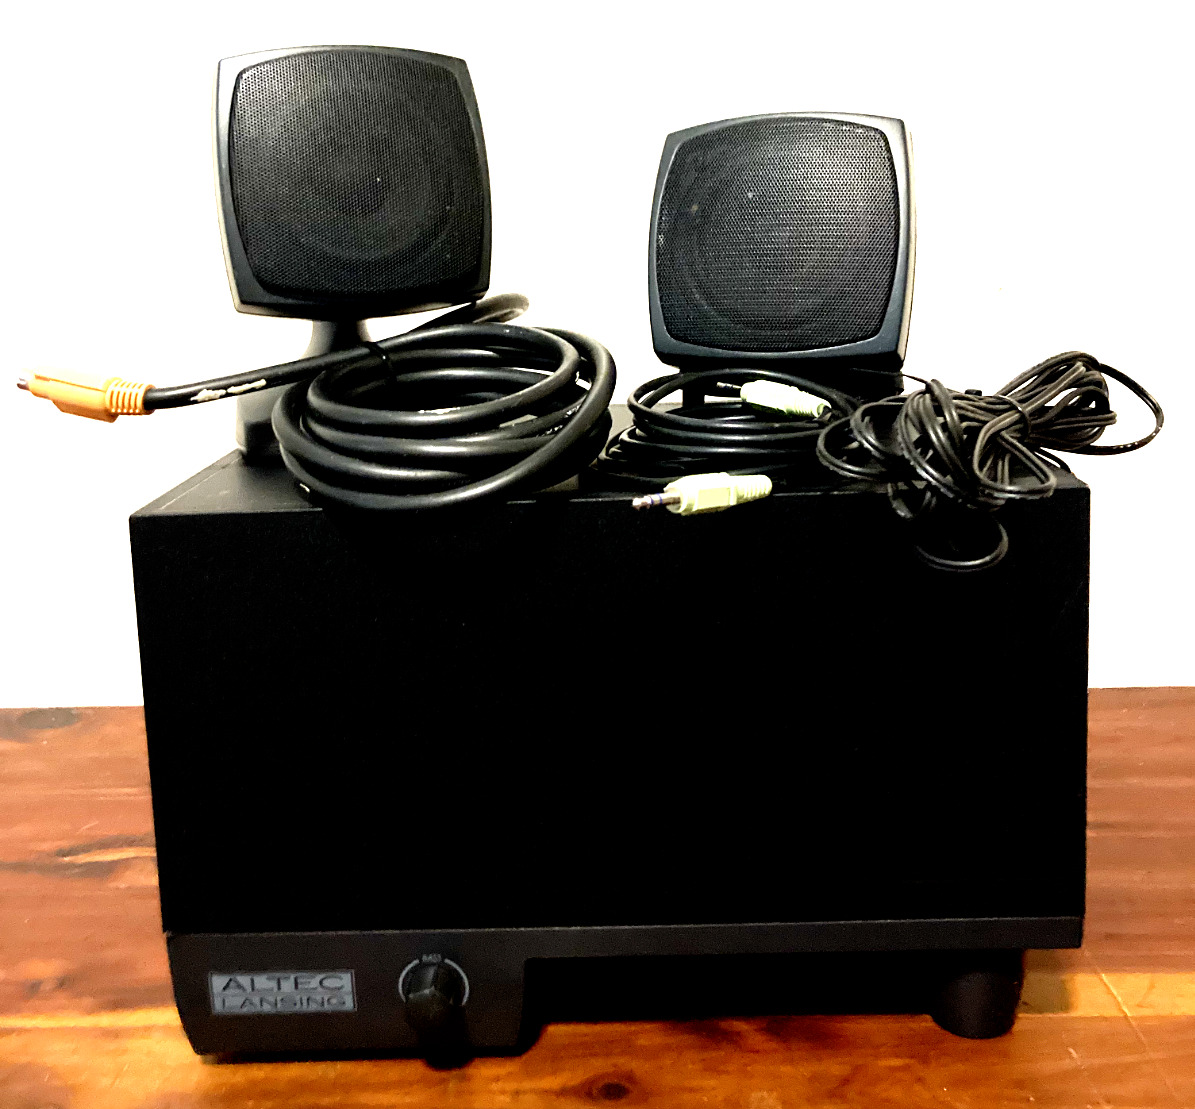 Altec Lansing ACS54 Multimedia Computer Speaker System (2) Speakers + Subwoofer